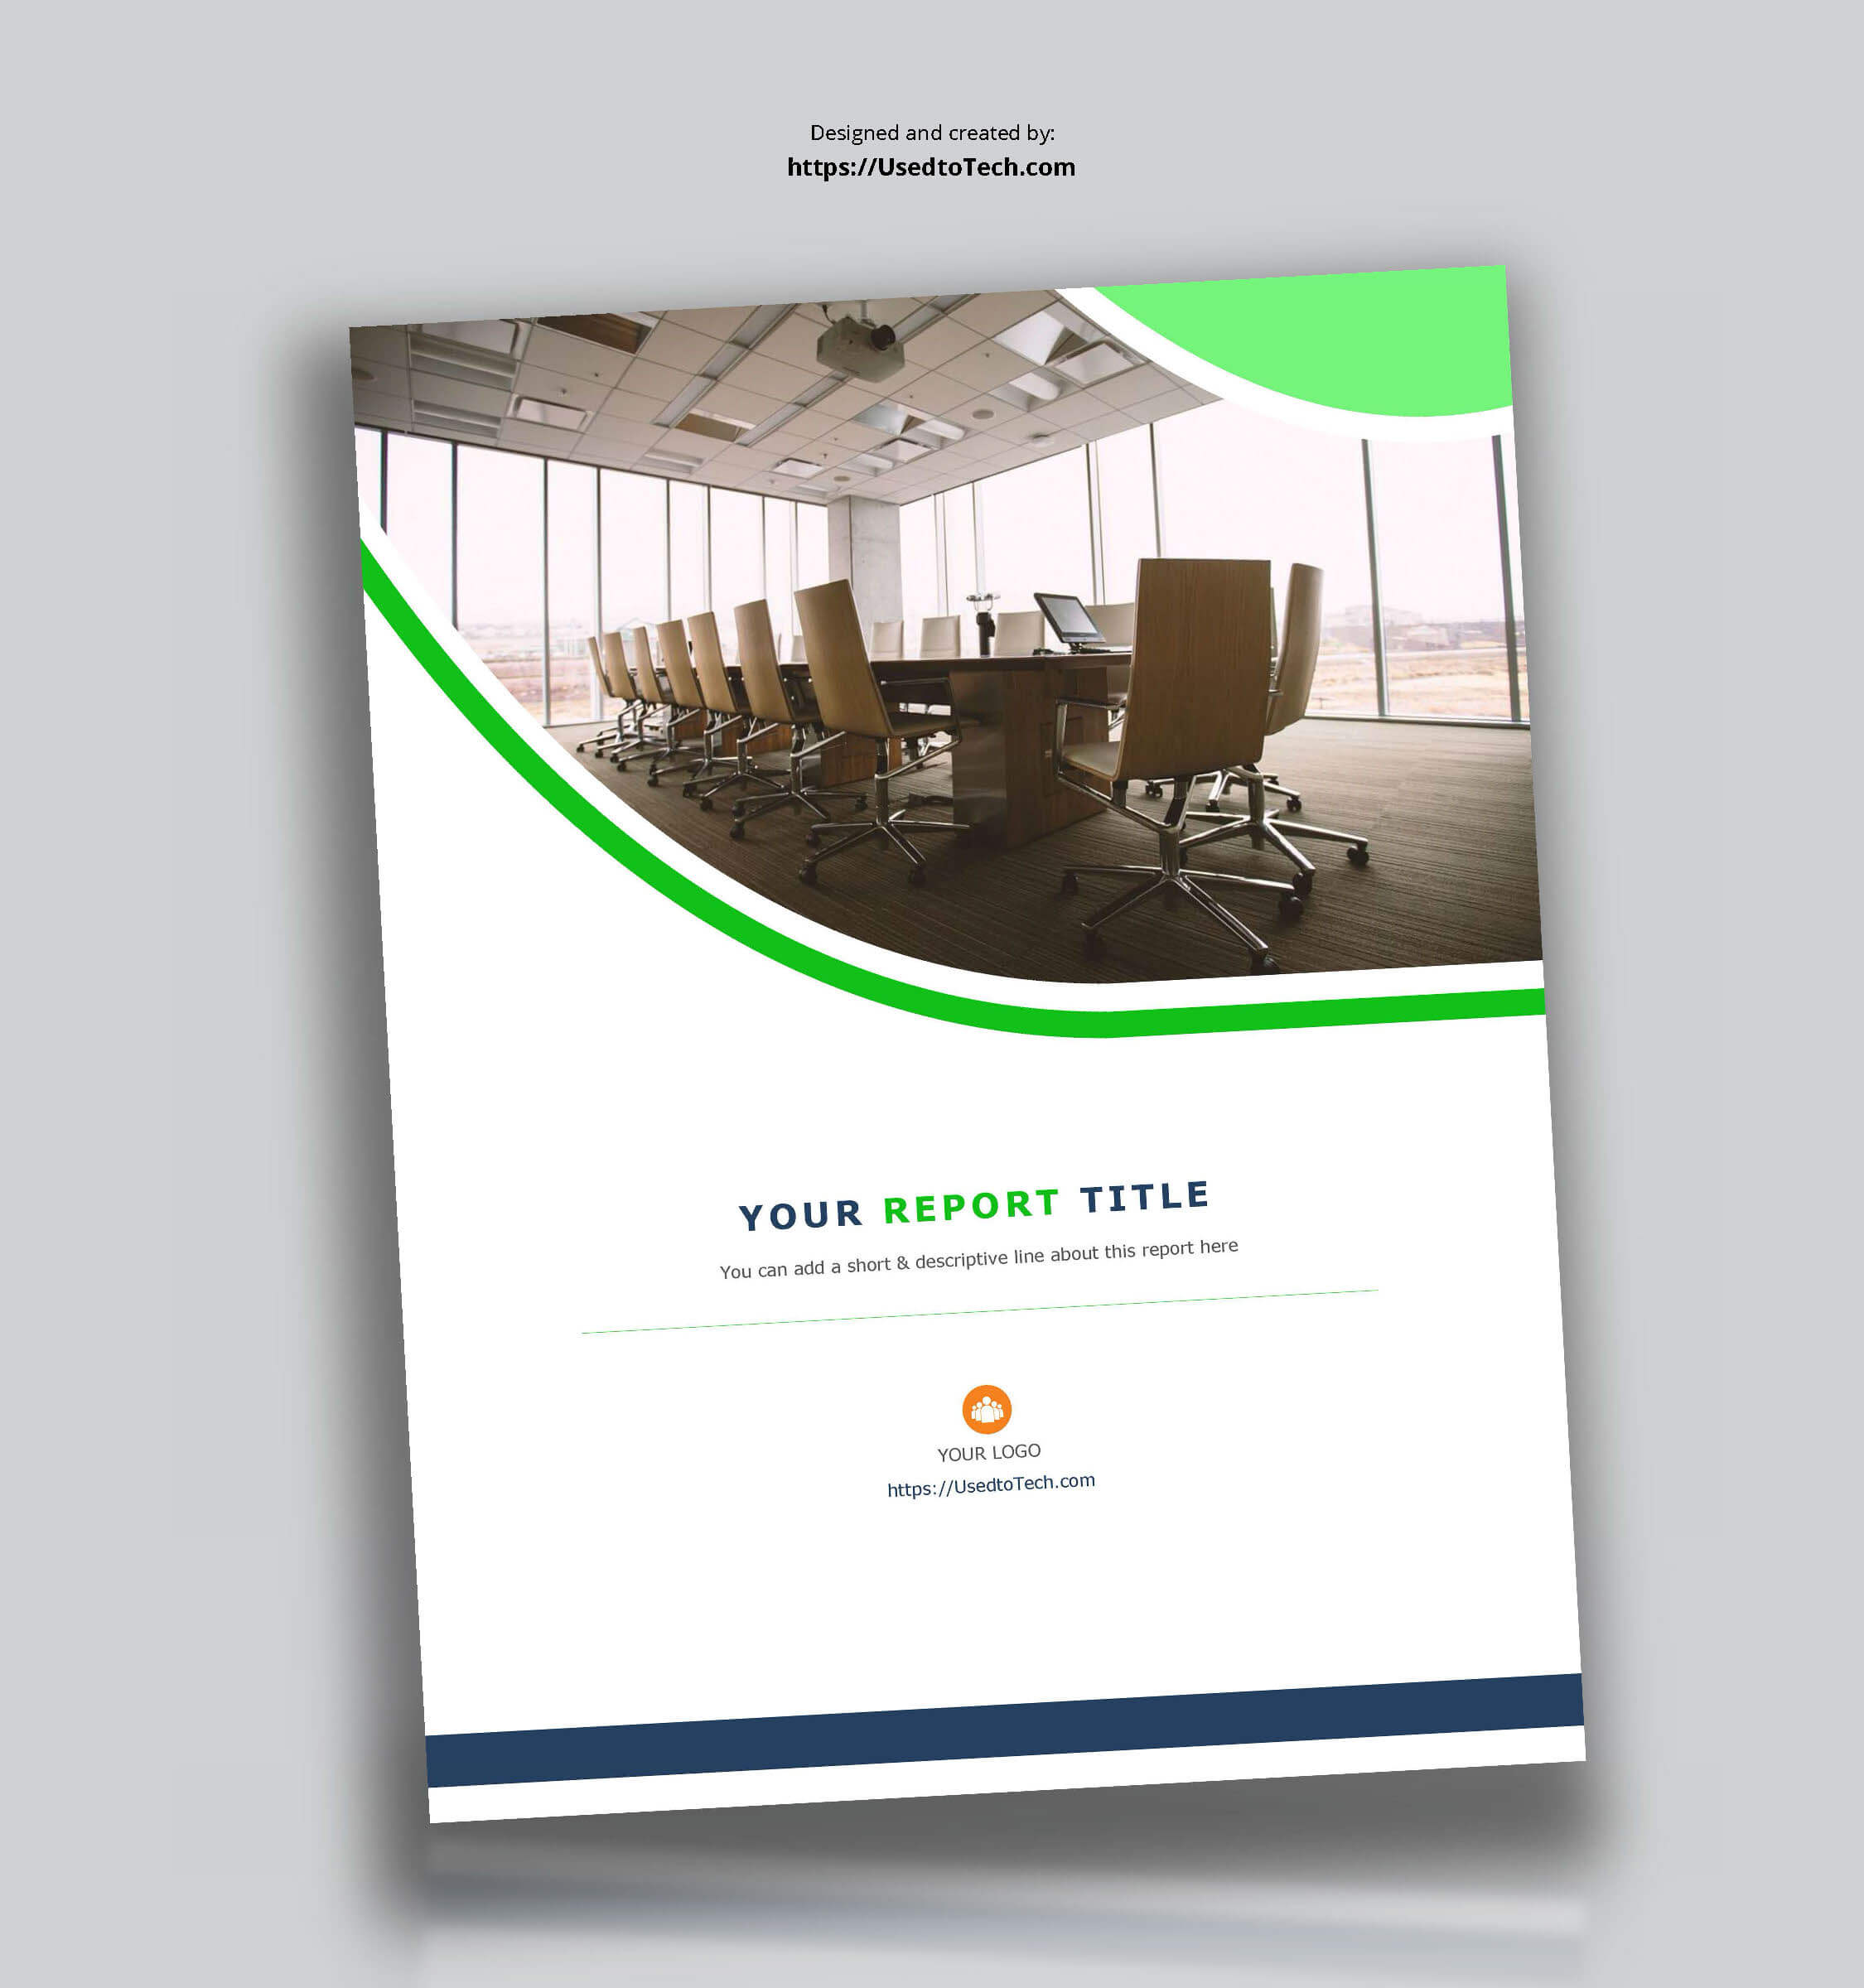 Corporate Report Design Template In Microsoft Word – Used To For Microsoft Word Templates Reports